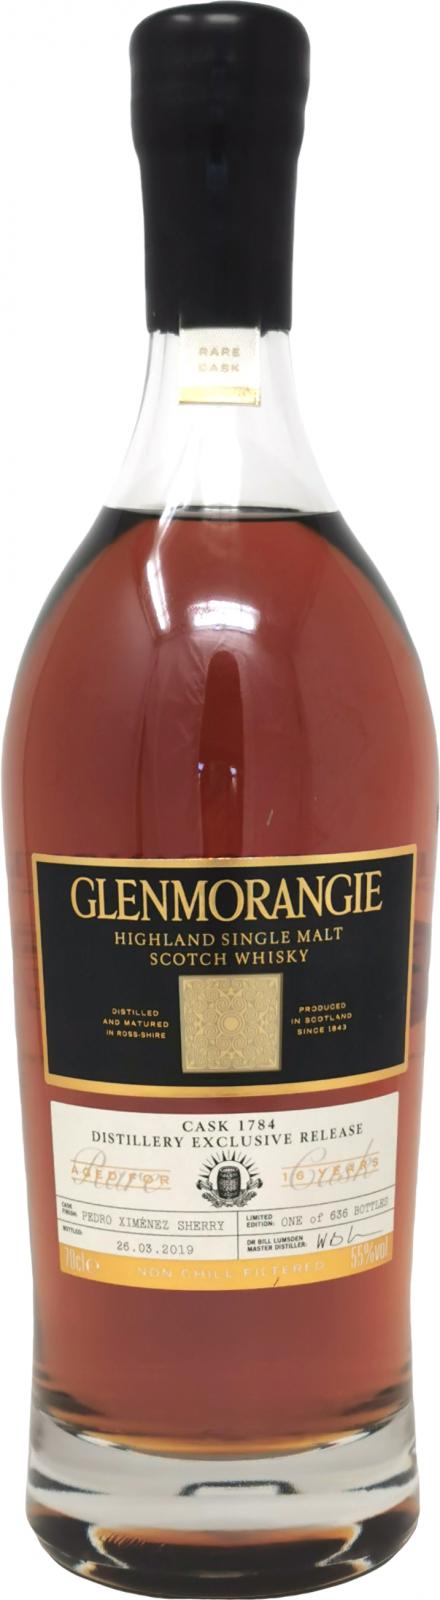 Glenmorangie Single Cask 1784 - Whisky Magazine